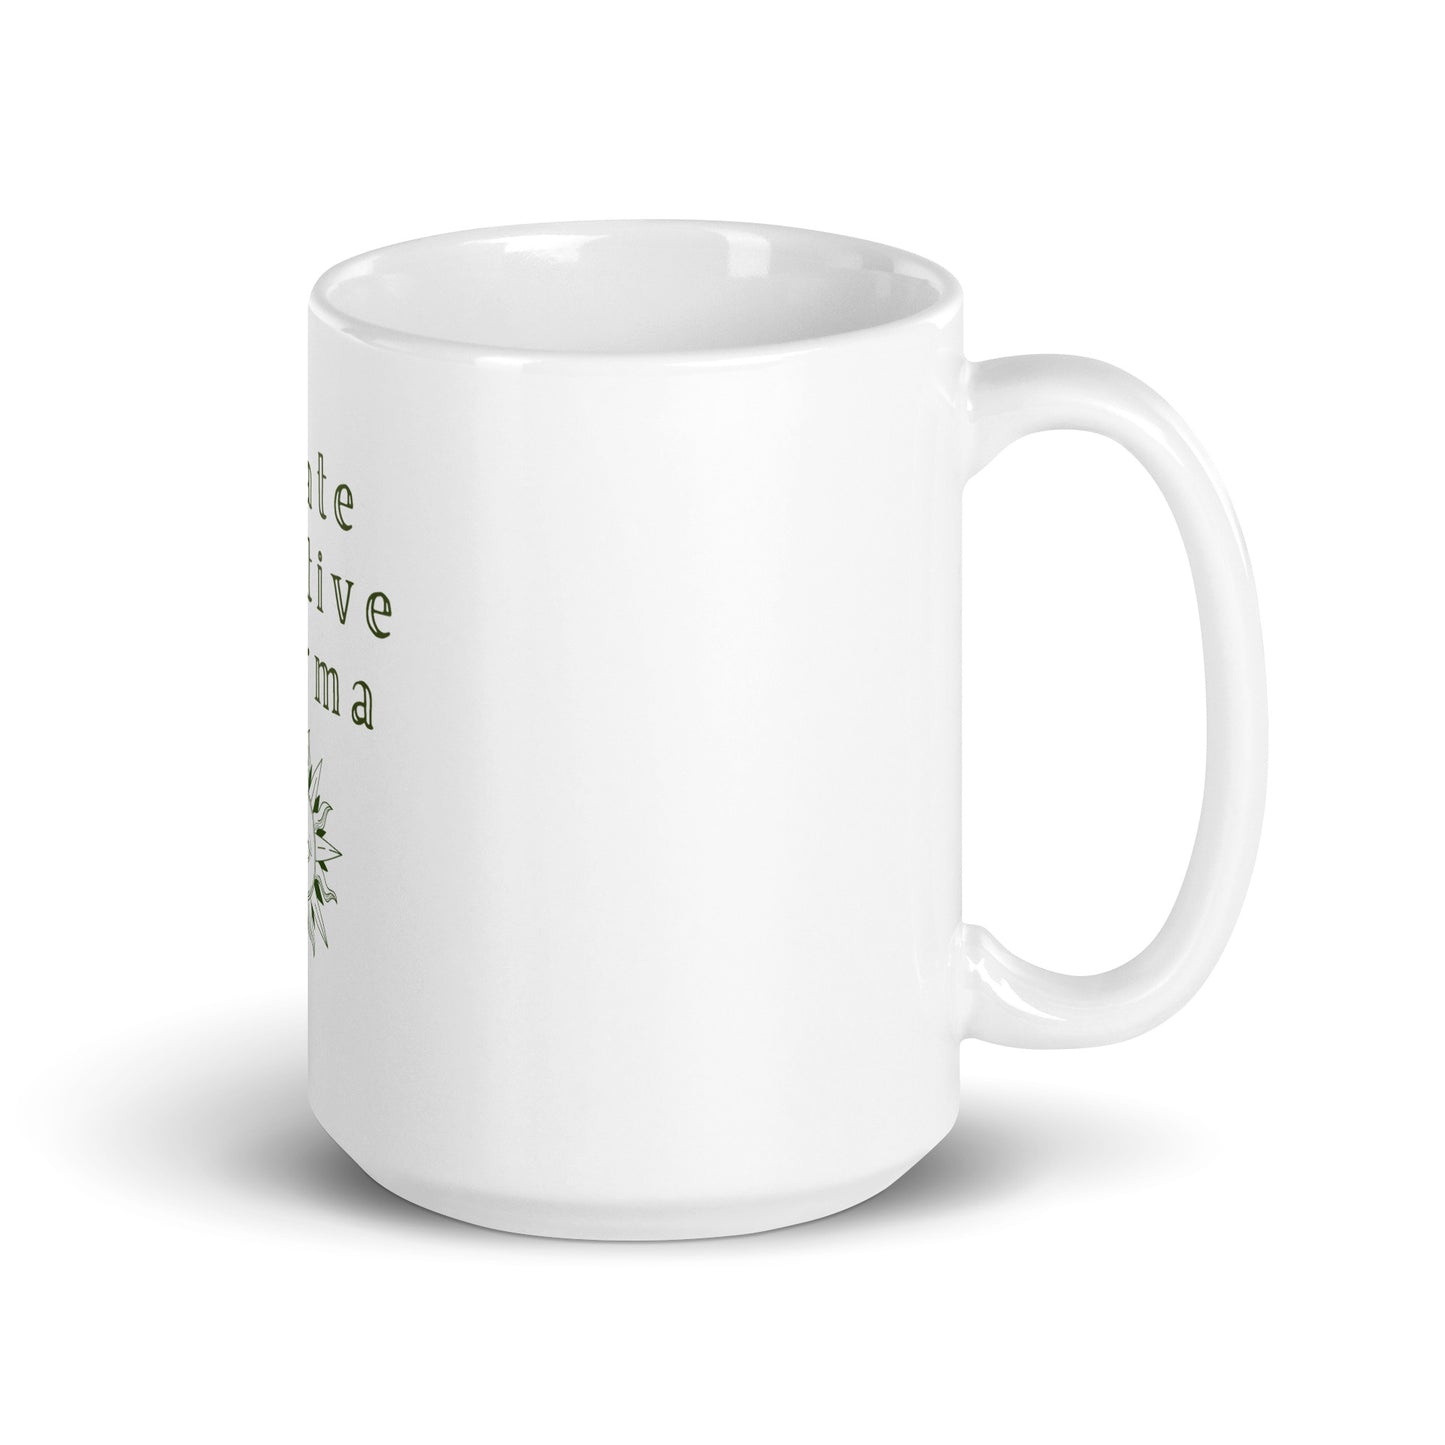 Create Positive Karma White Glossy Mug